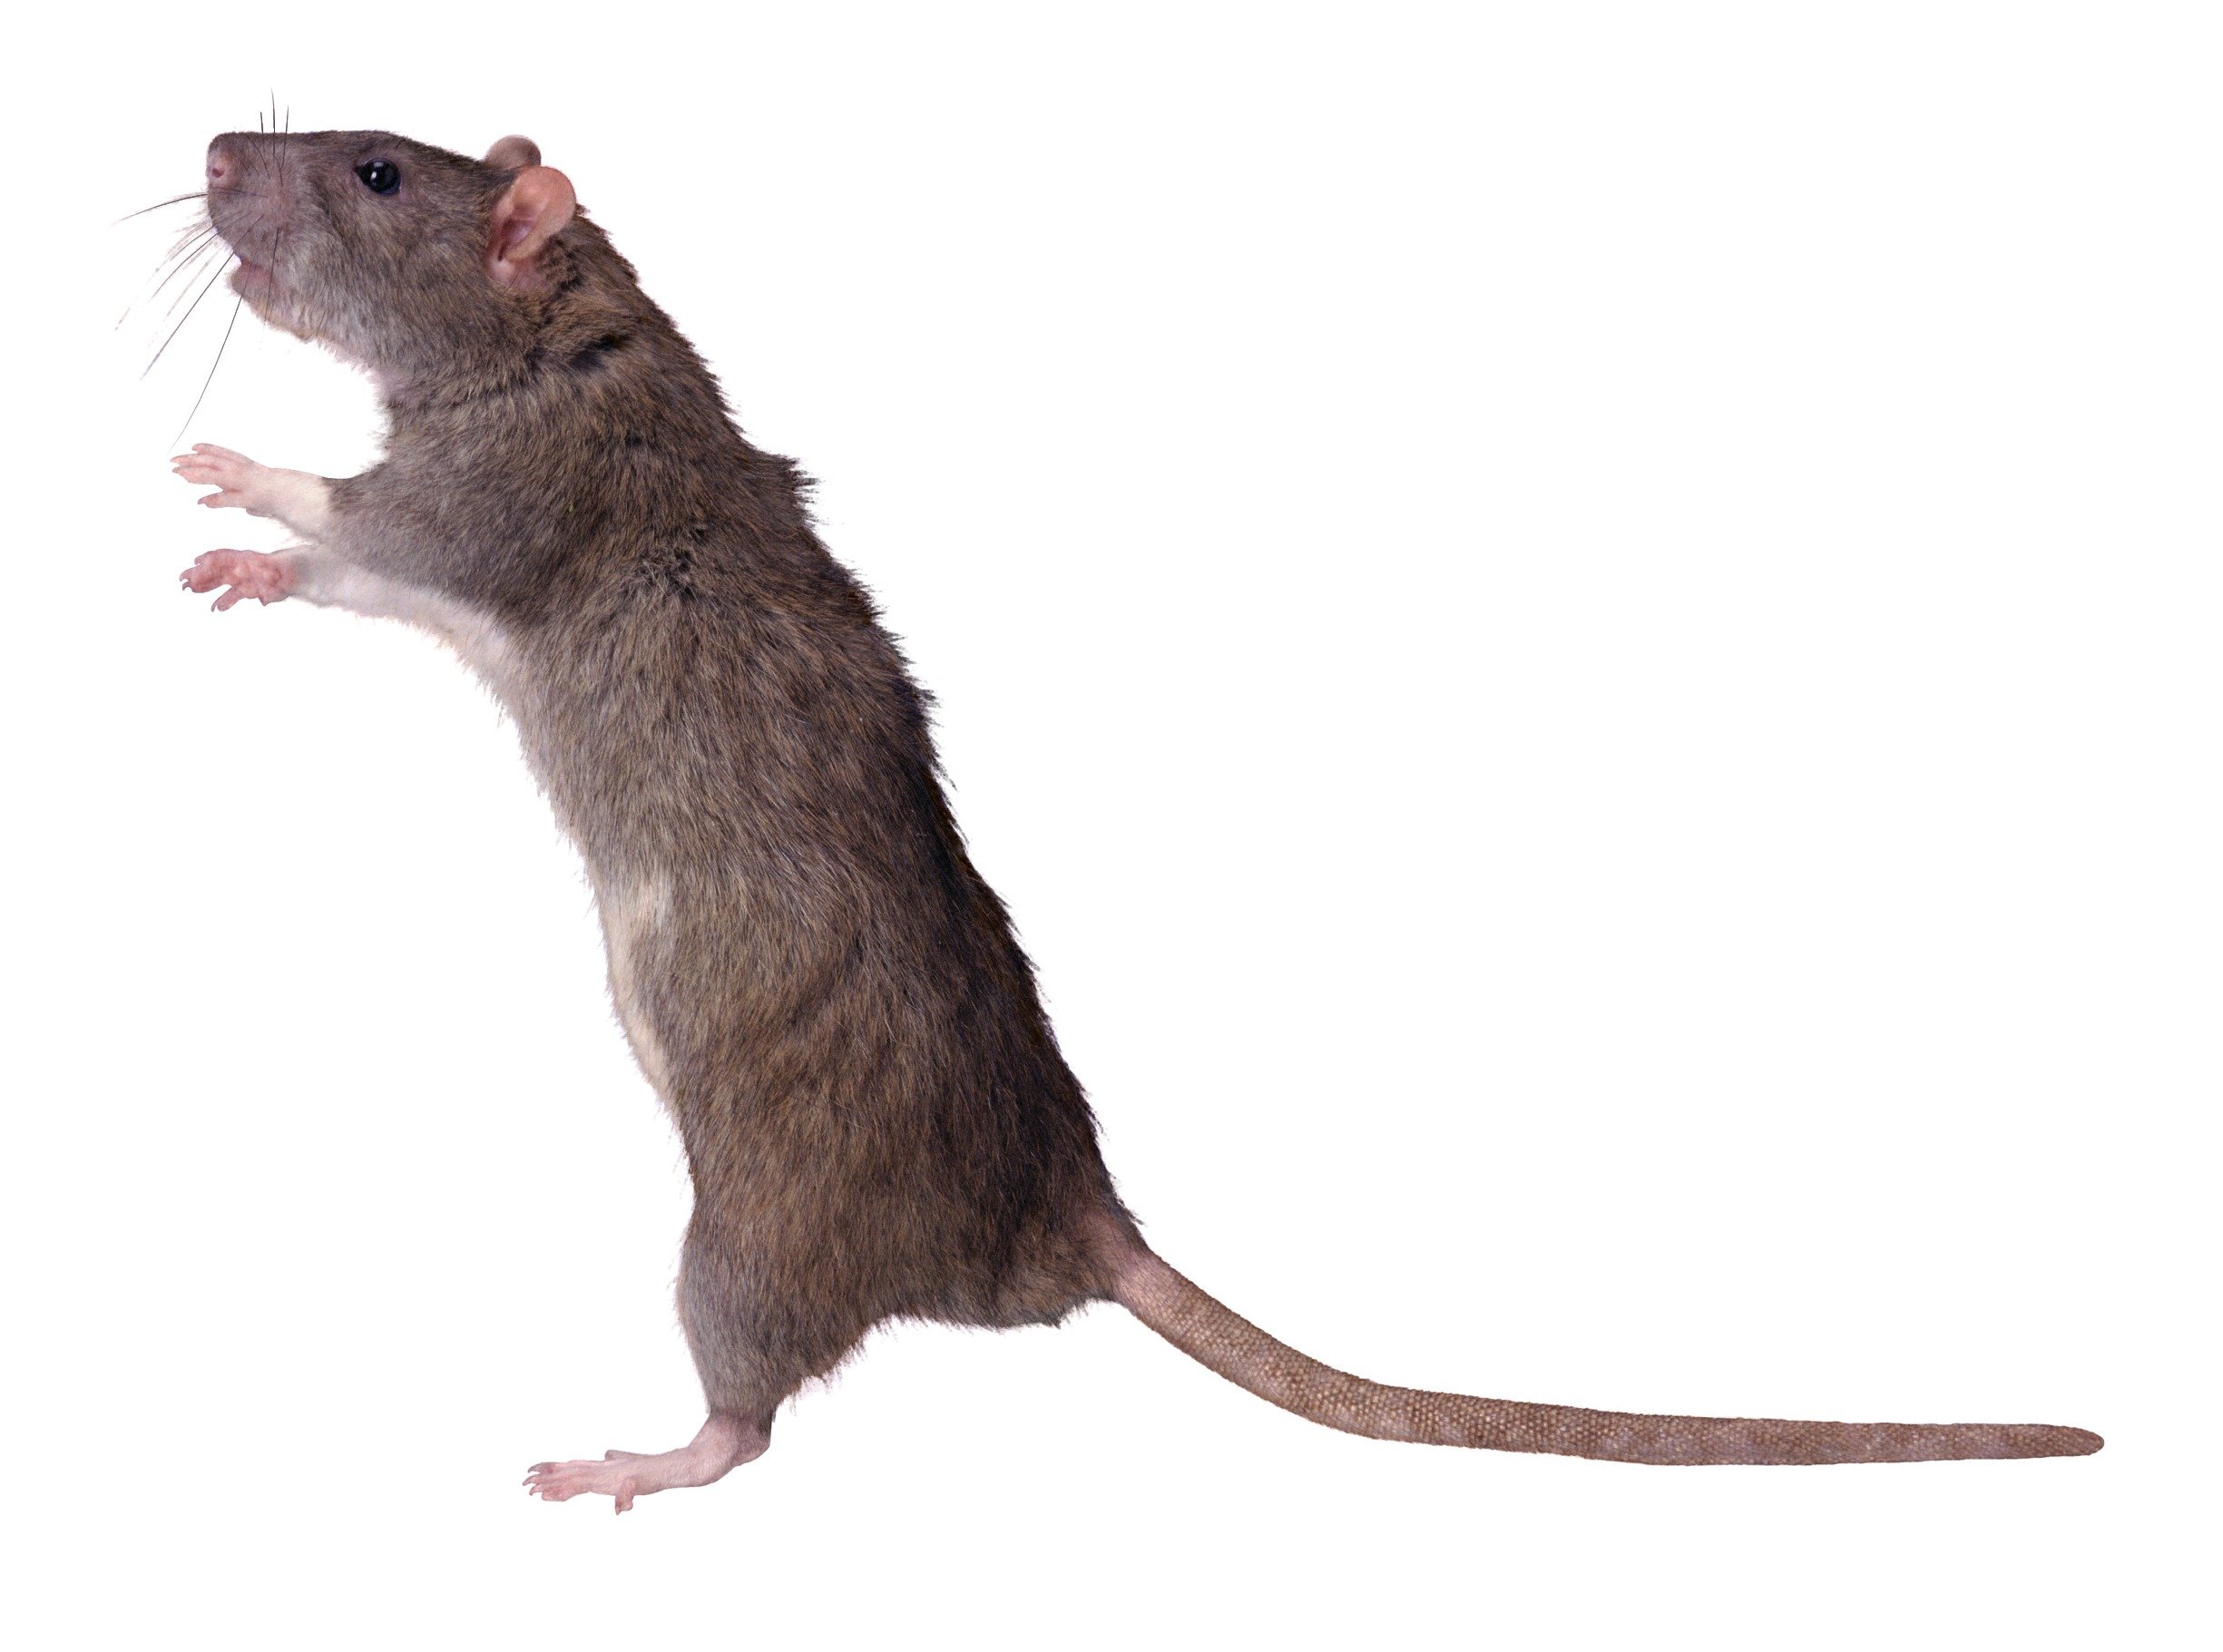 Мышь рост. Крыса. Мышка на задних лапках. Мышка на белом фоне.